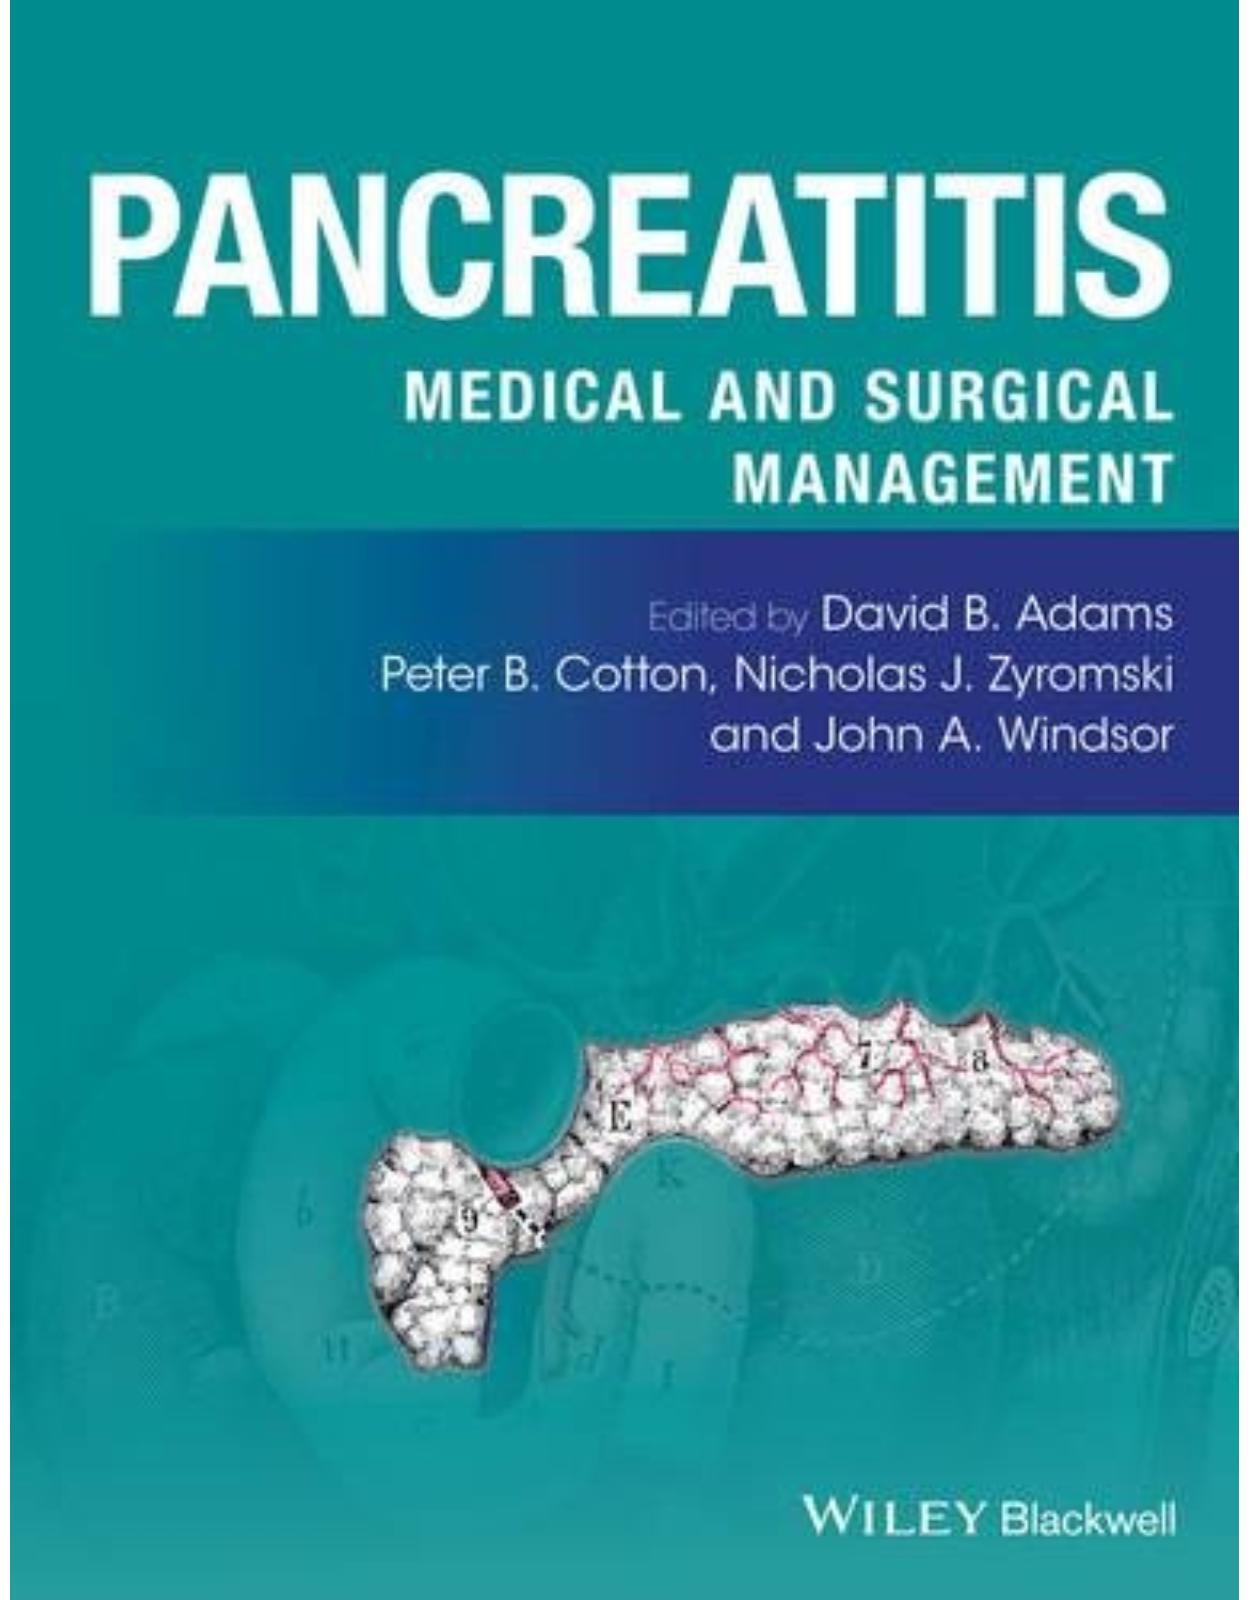  Pancreatitis: Medical and Surgical Management